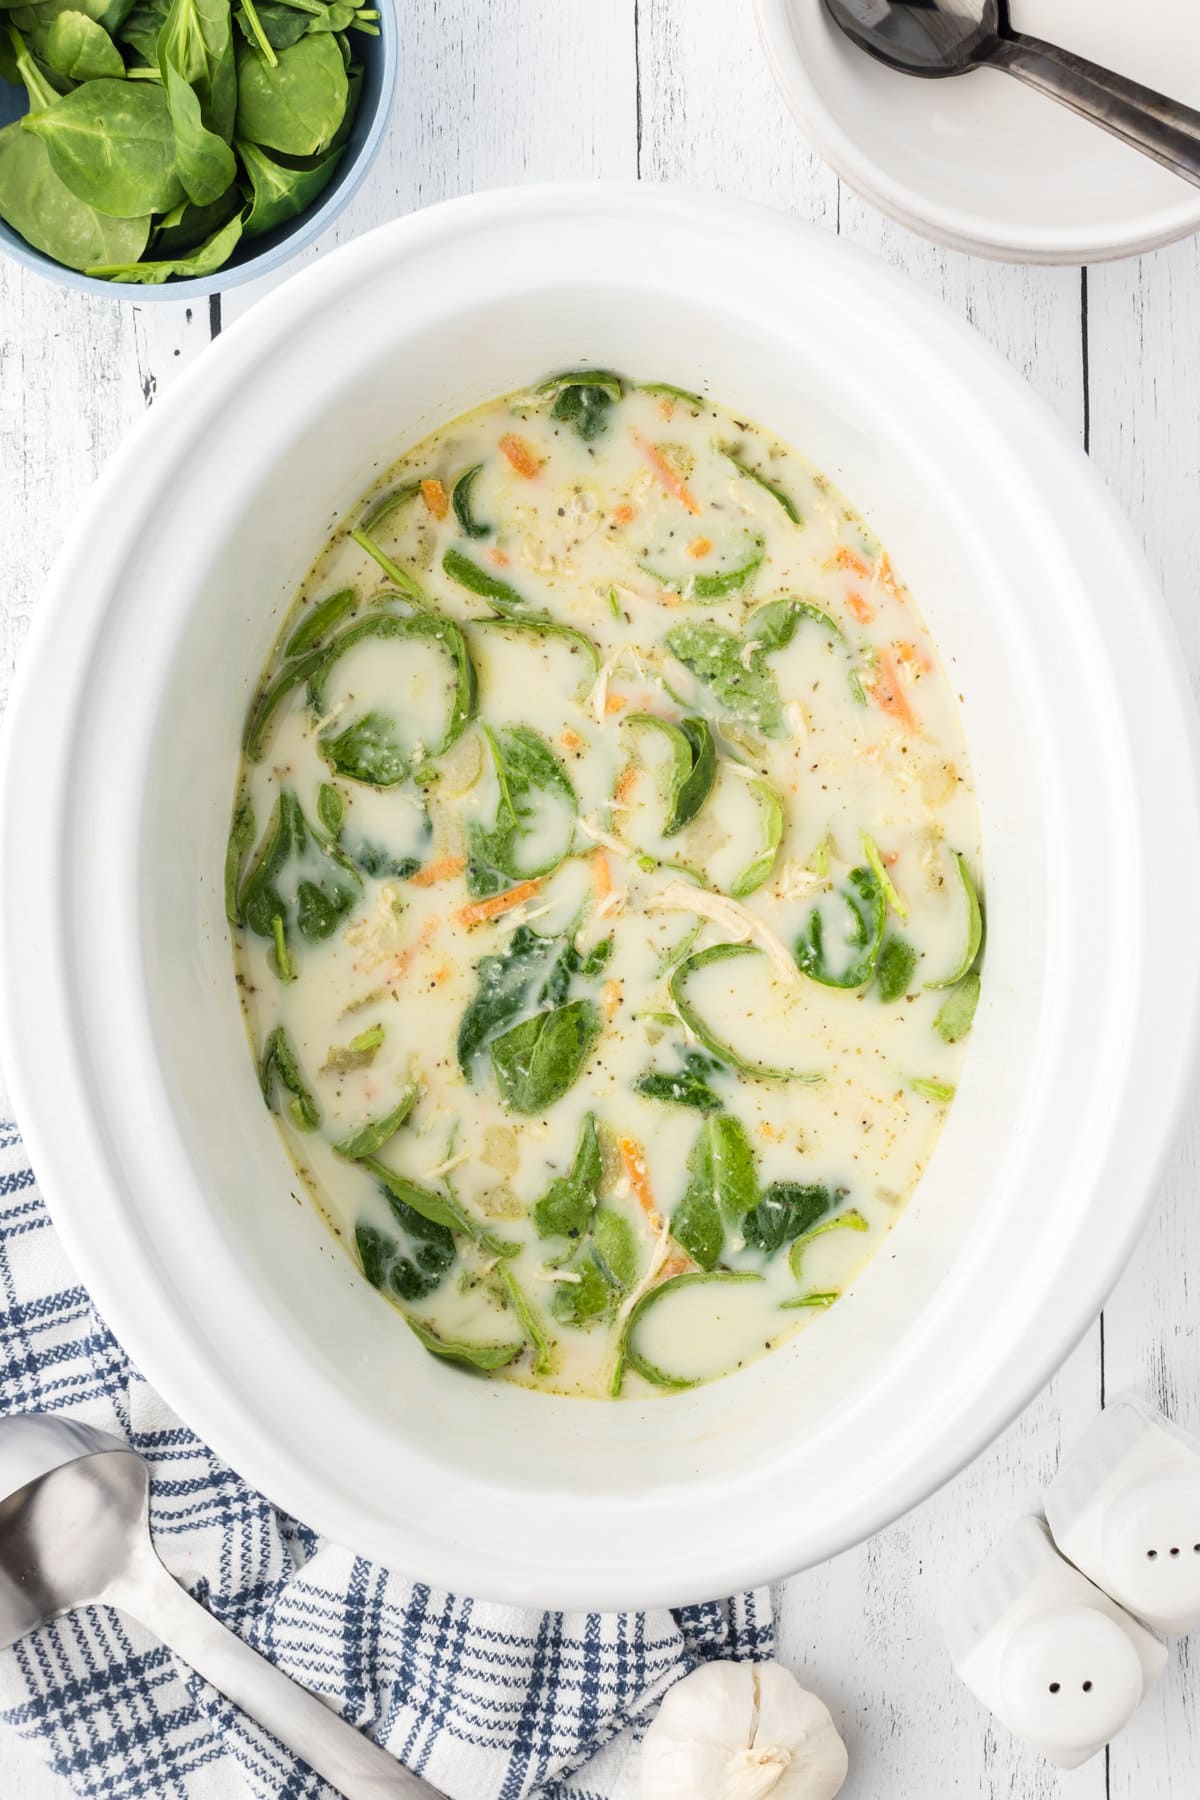 Spinach stirred into the gnocchi soup.